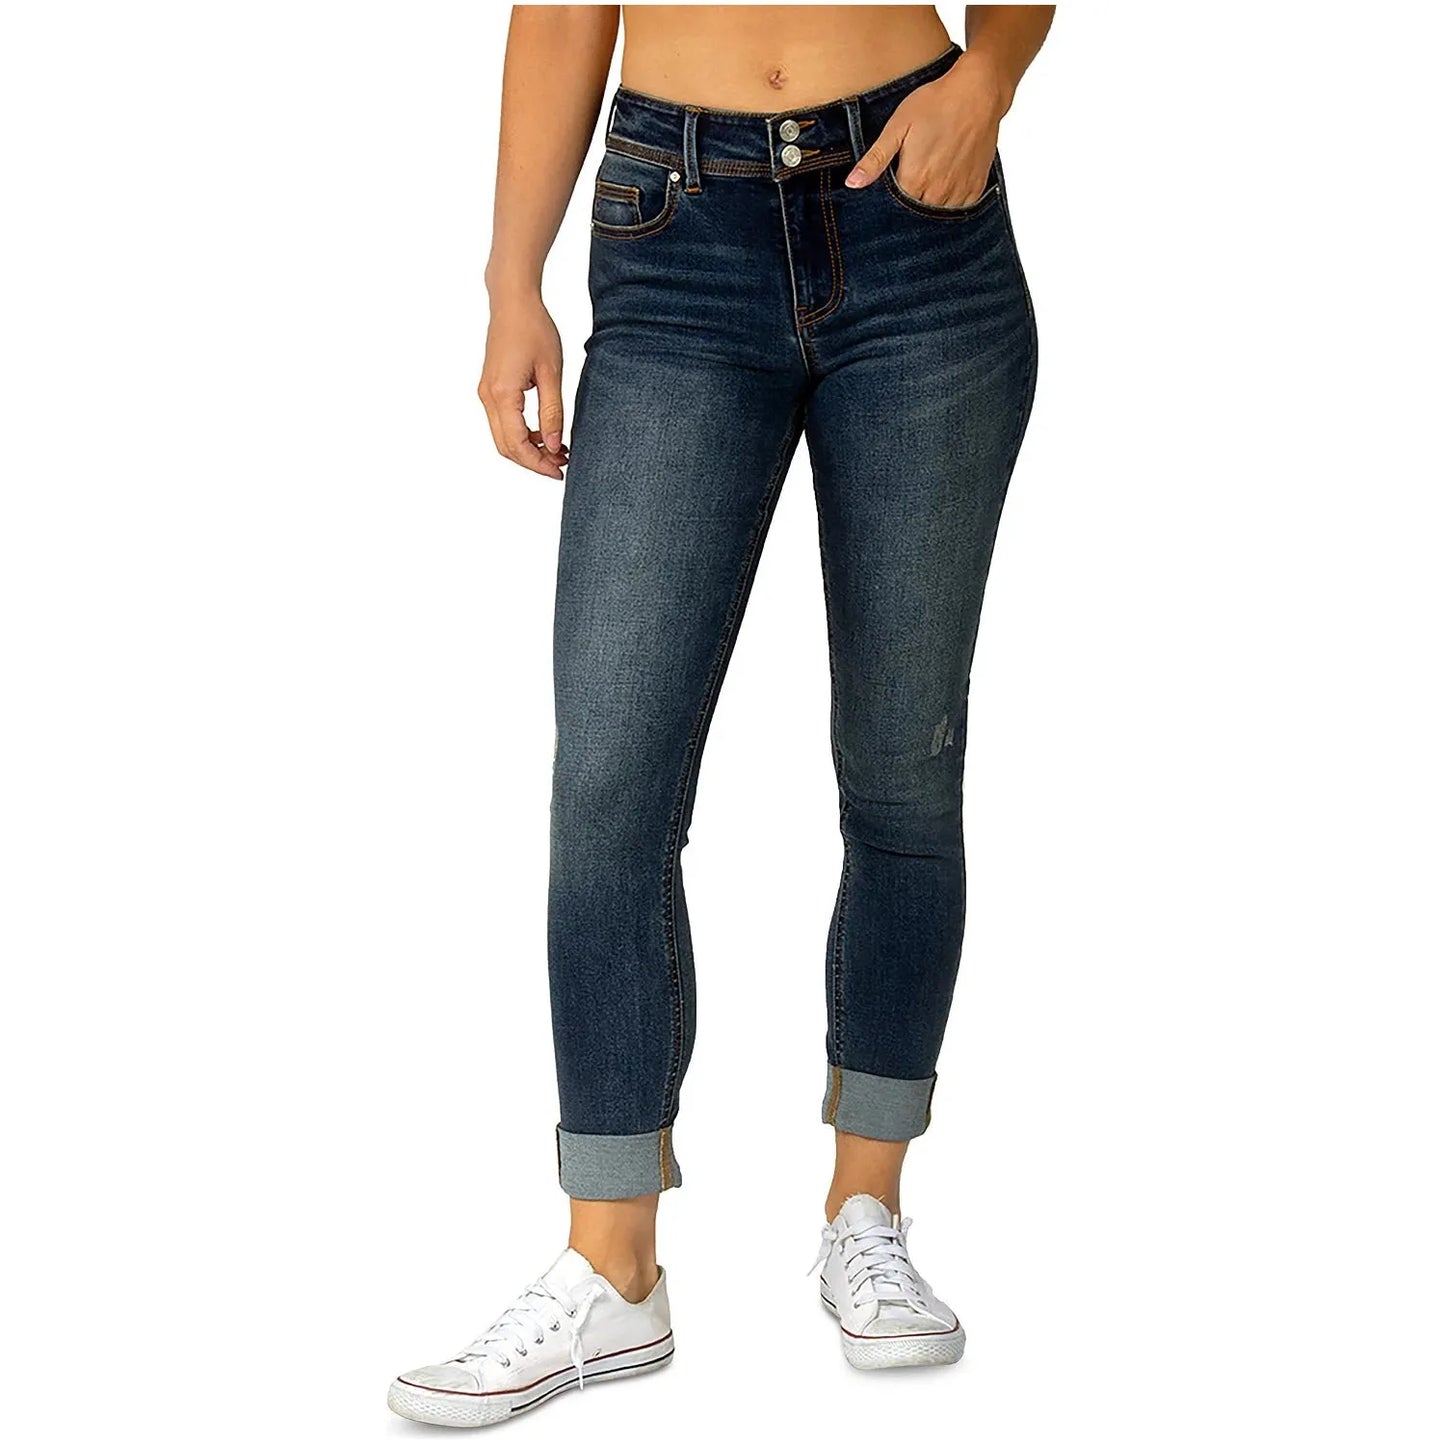 Indigo Rein Juniors Mid-Rise Roll-Cuff Skinny Jeans, Blue, Size: 1/24